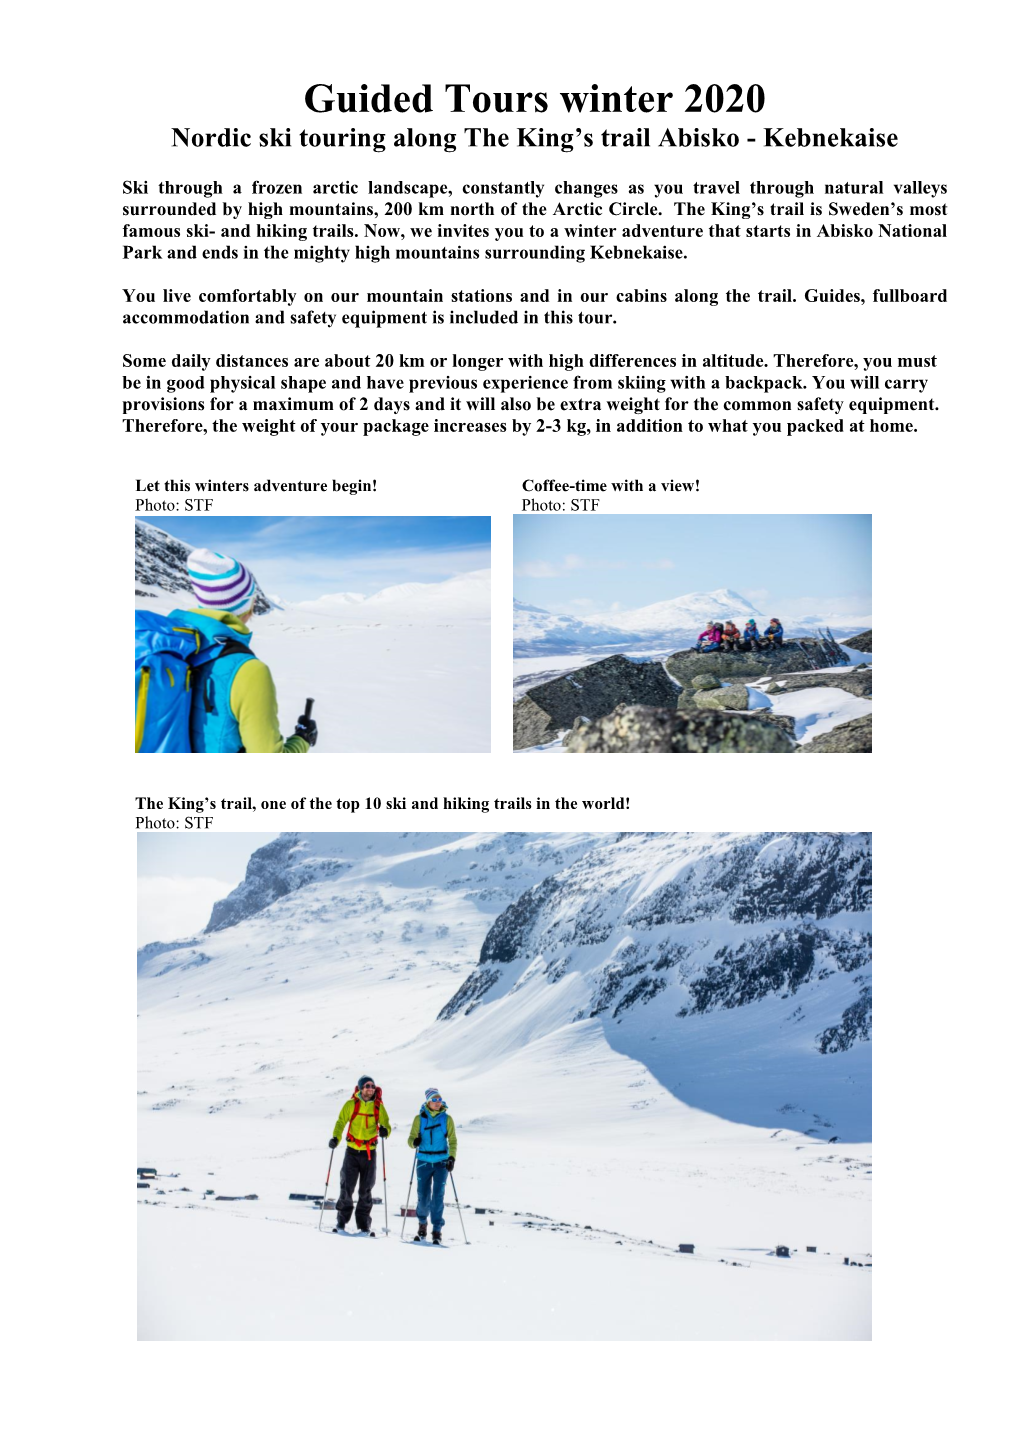 Nordic Ski Touring Along the King's Trail Abisko